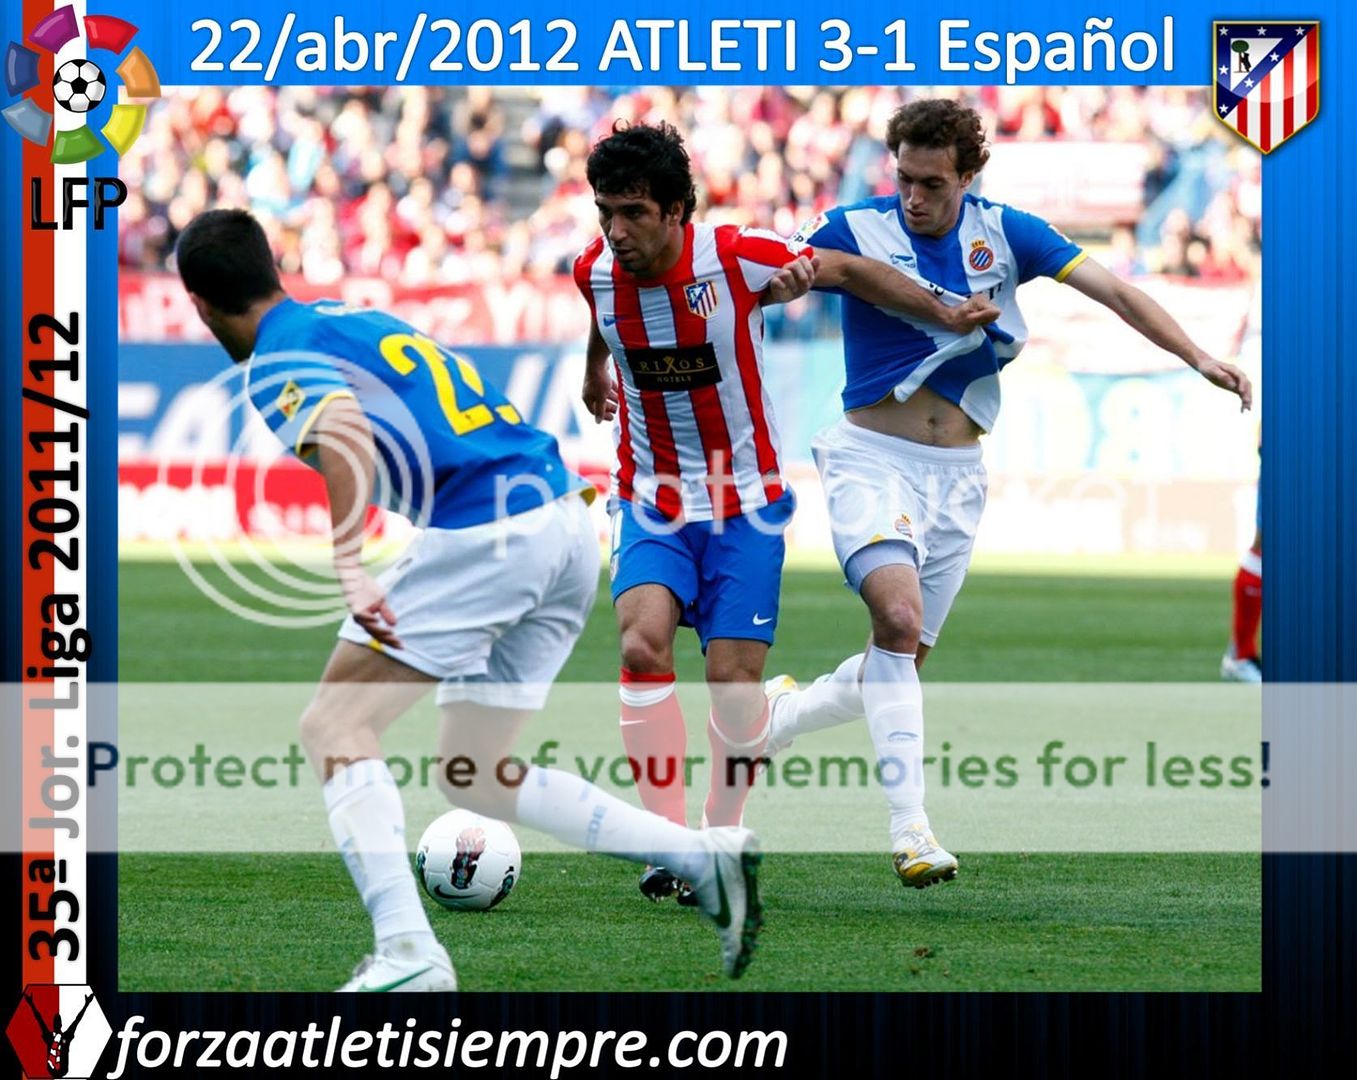 35ª Jor. Liga 2011/12 ATLETI 3-1 Español.- Arda tiene magia 026Copiar-9